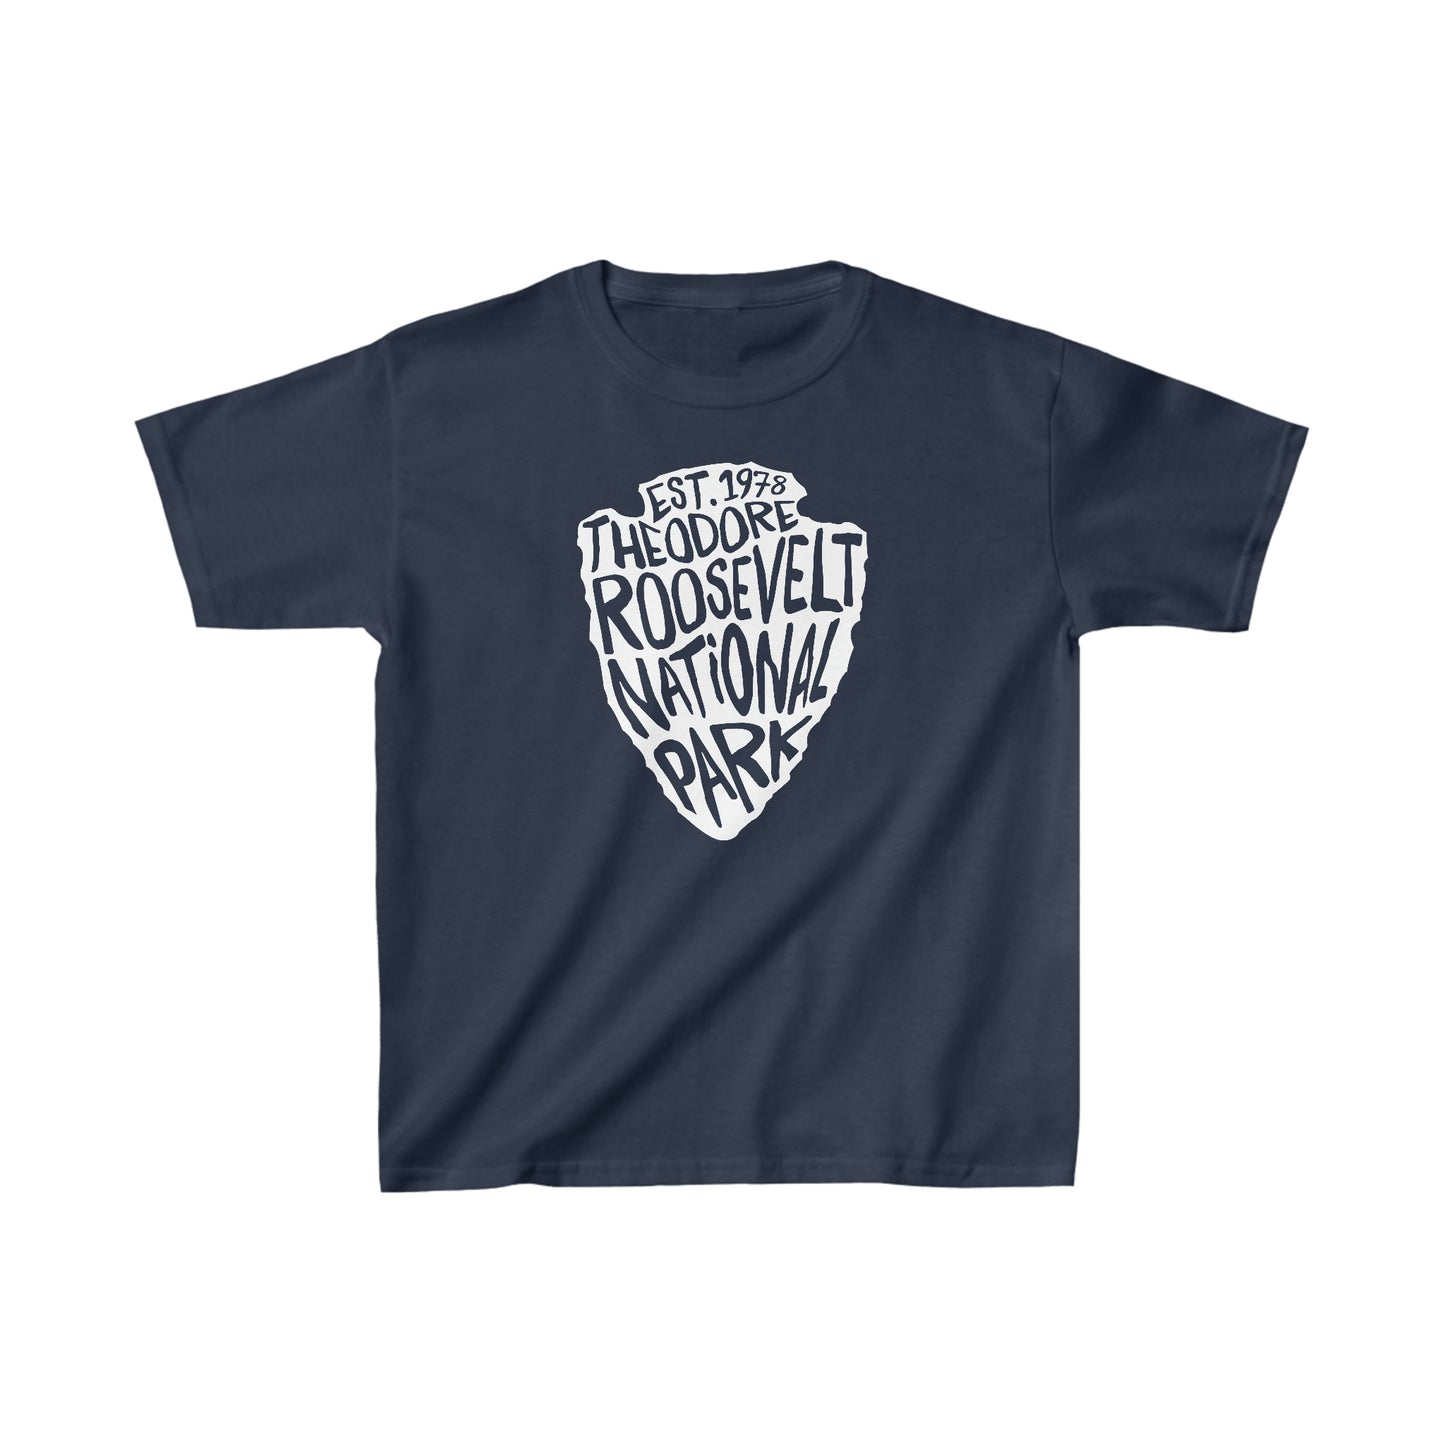 Theodore Roosevelt National Park Child T-Shirt - Arrowhead Design